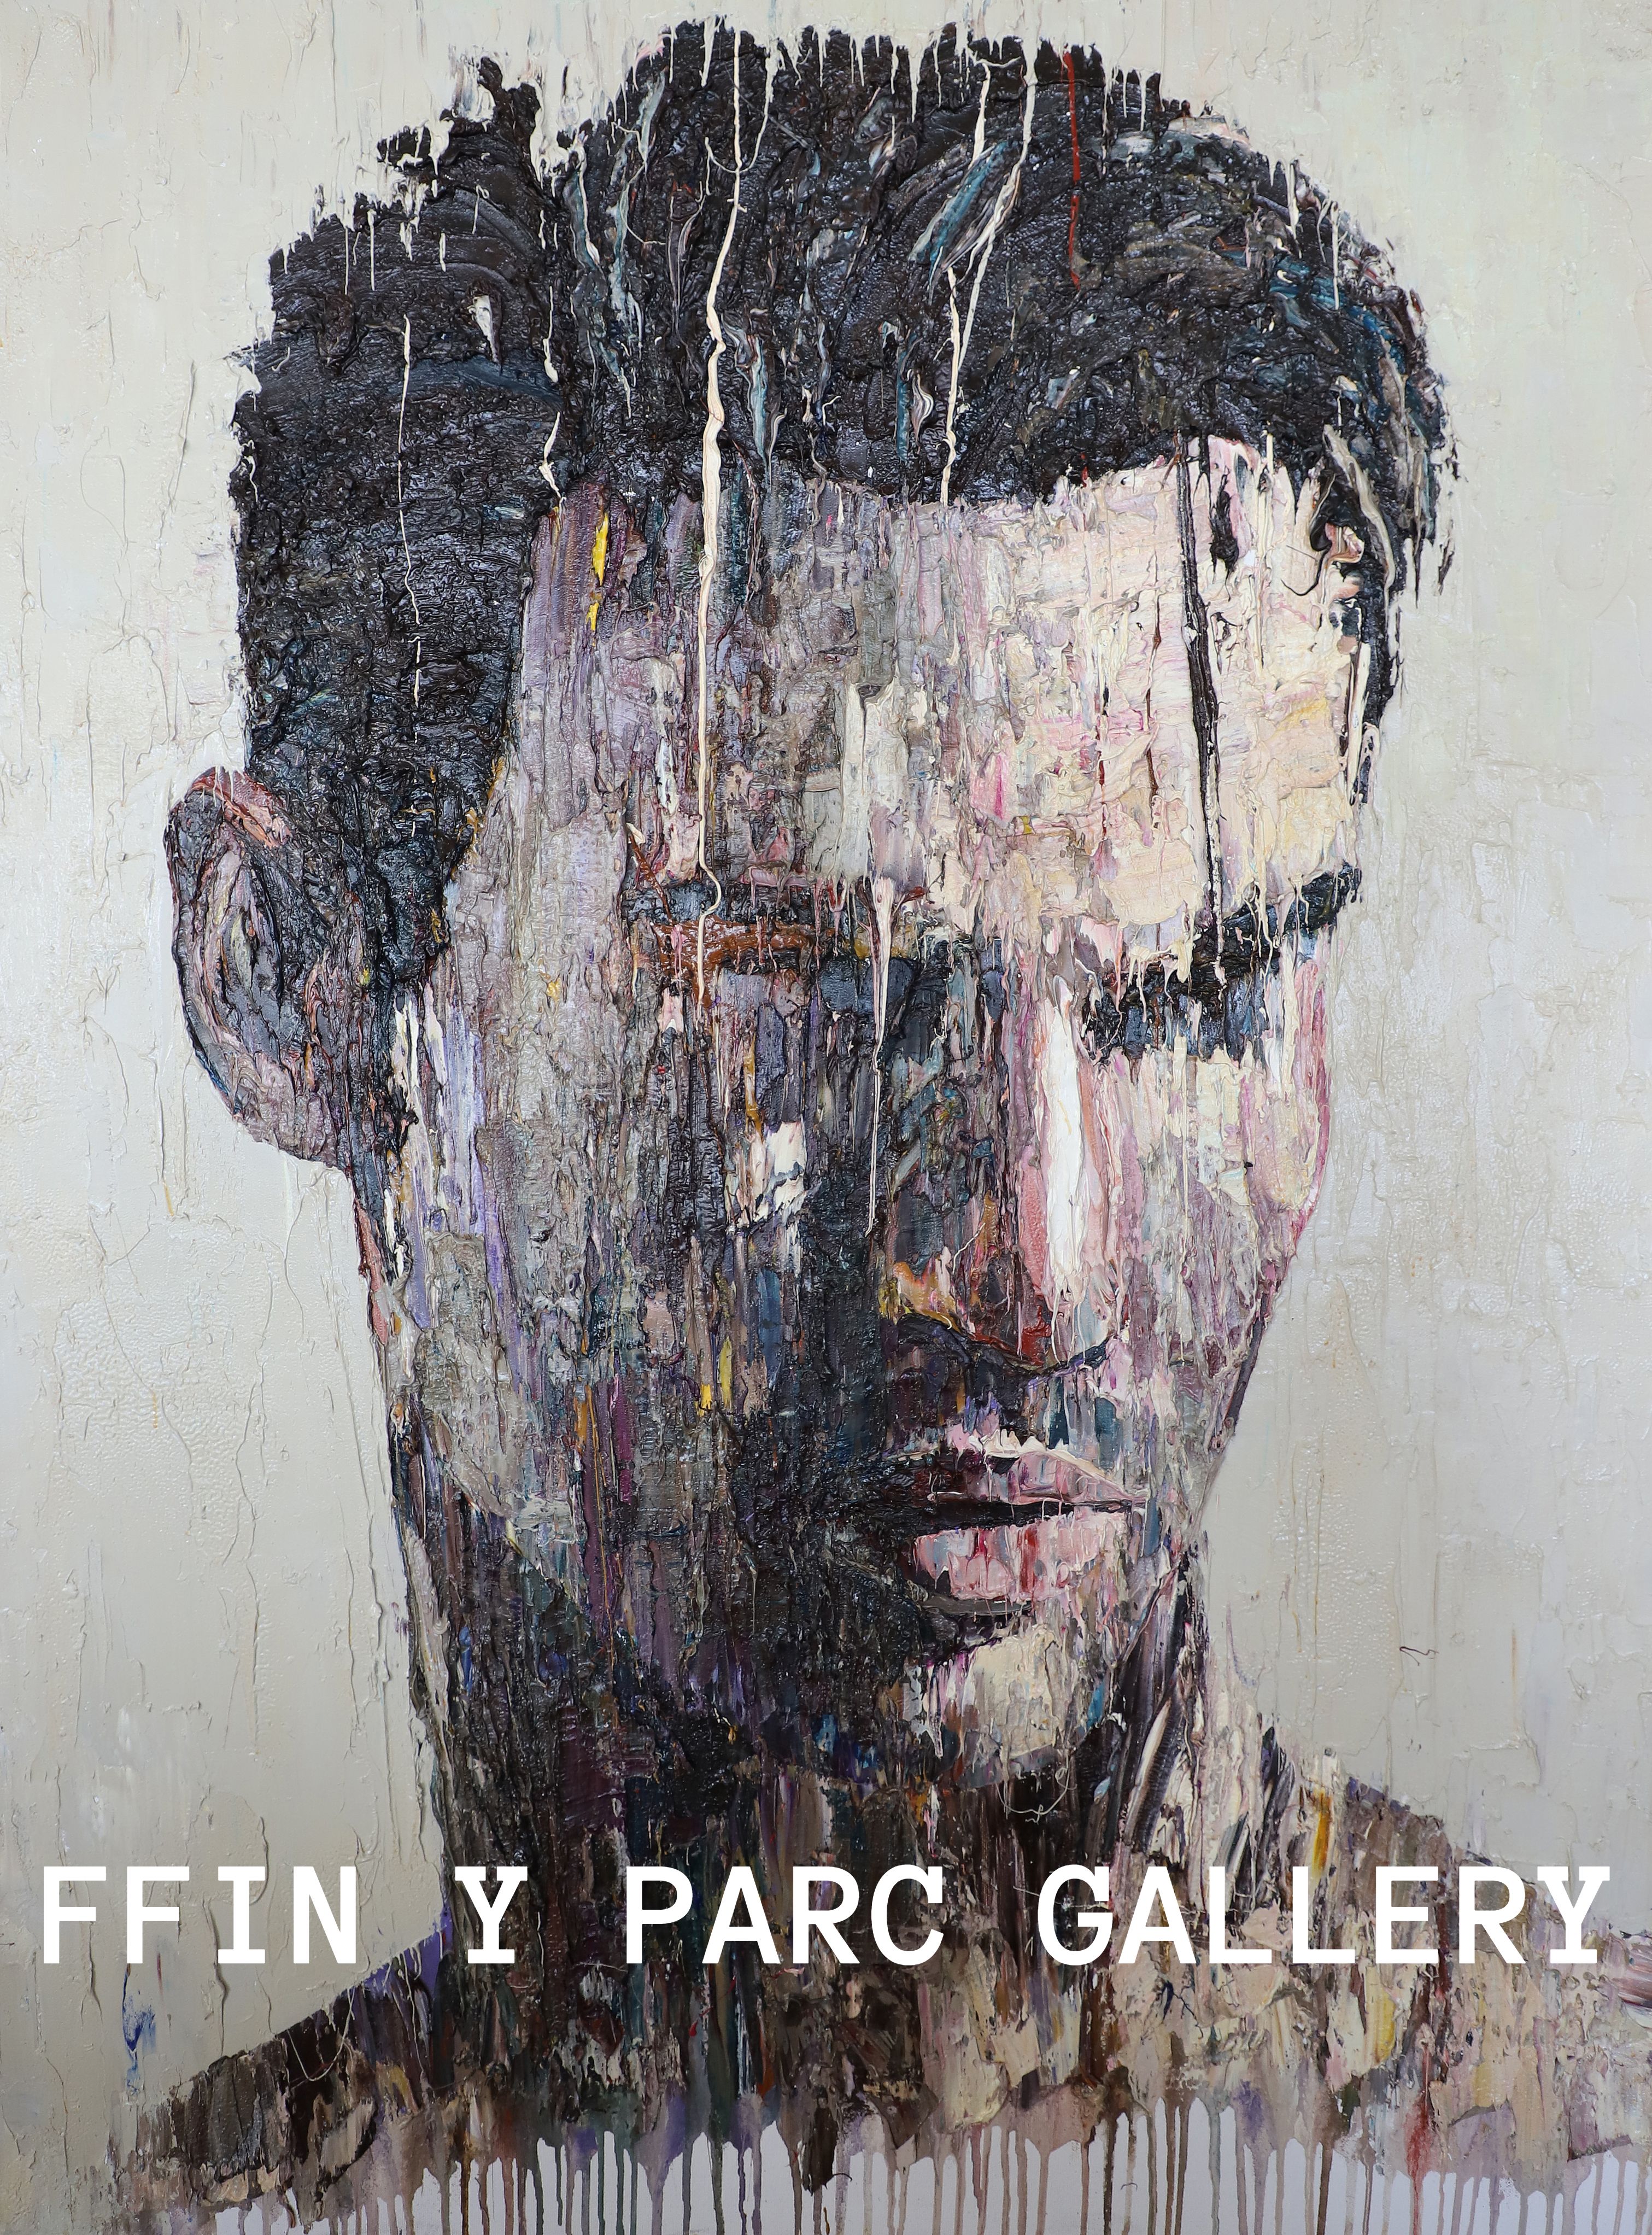 Ffin y Parc Gallery